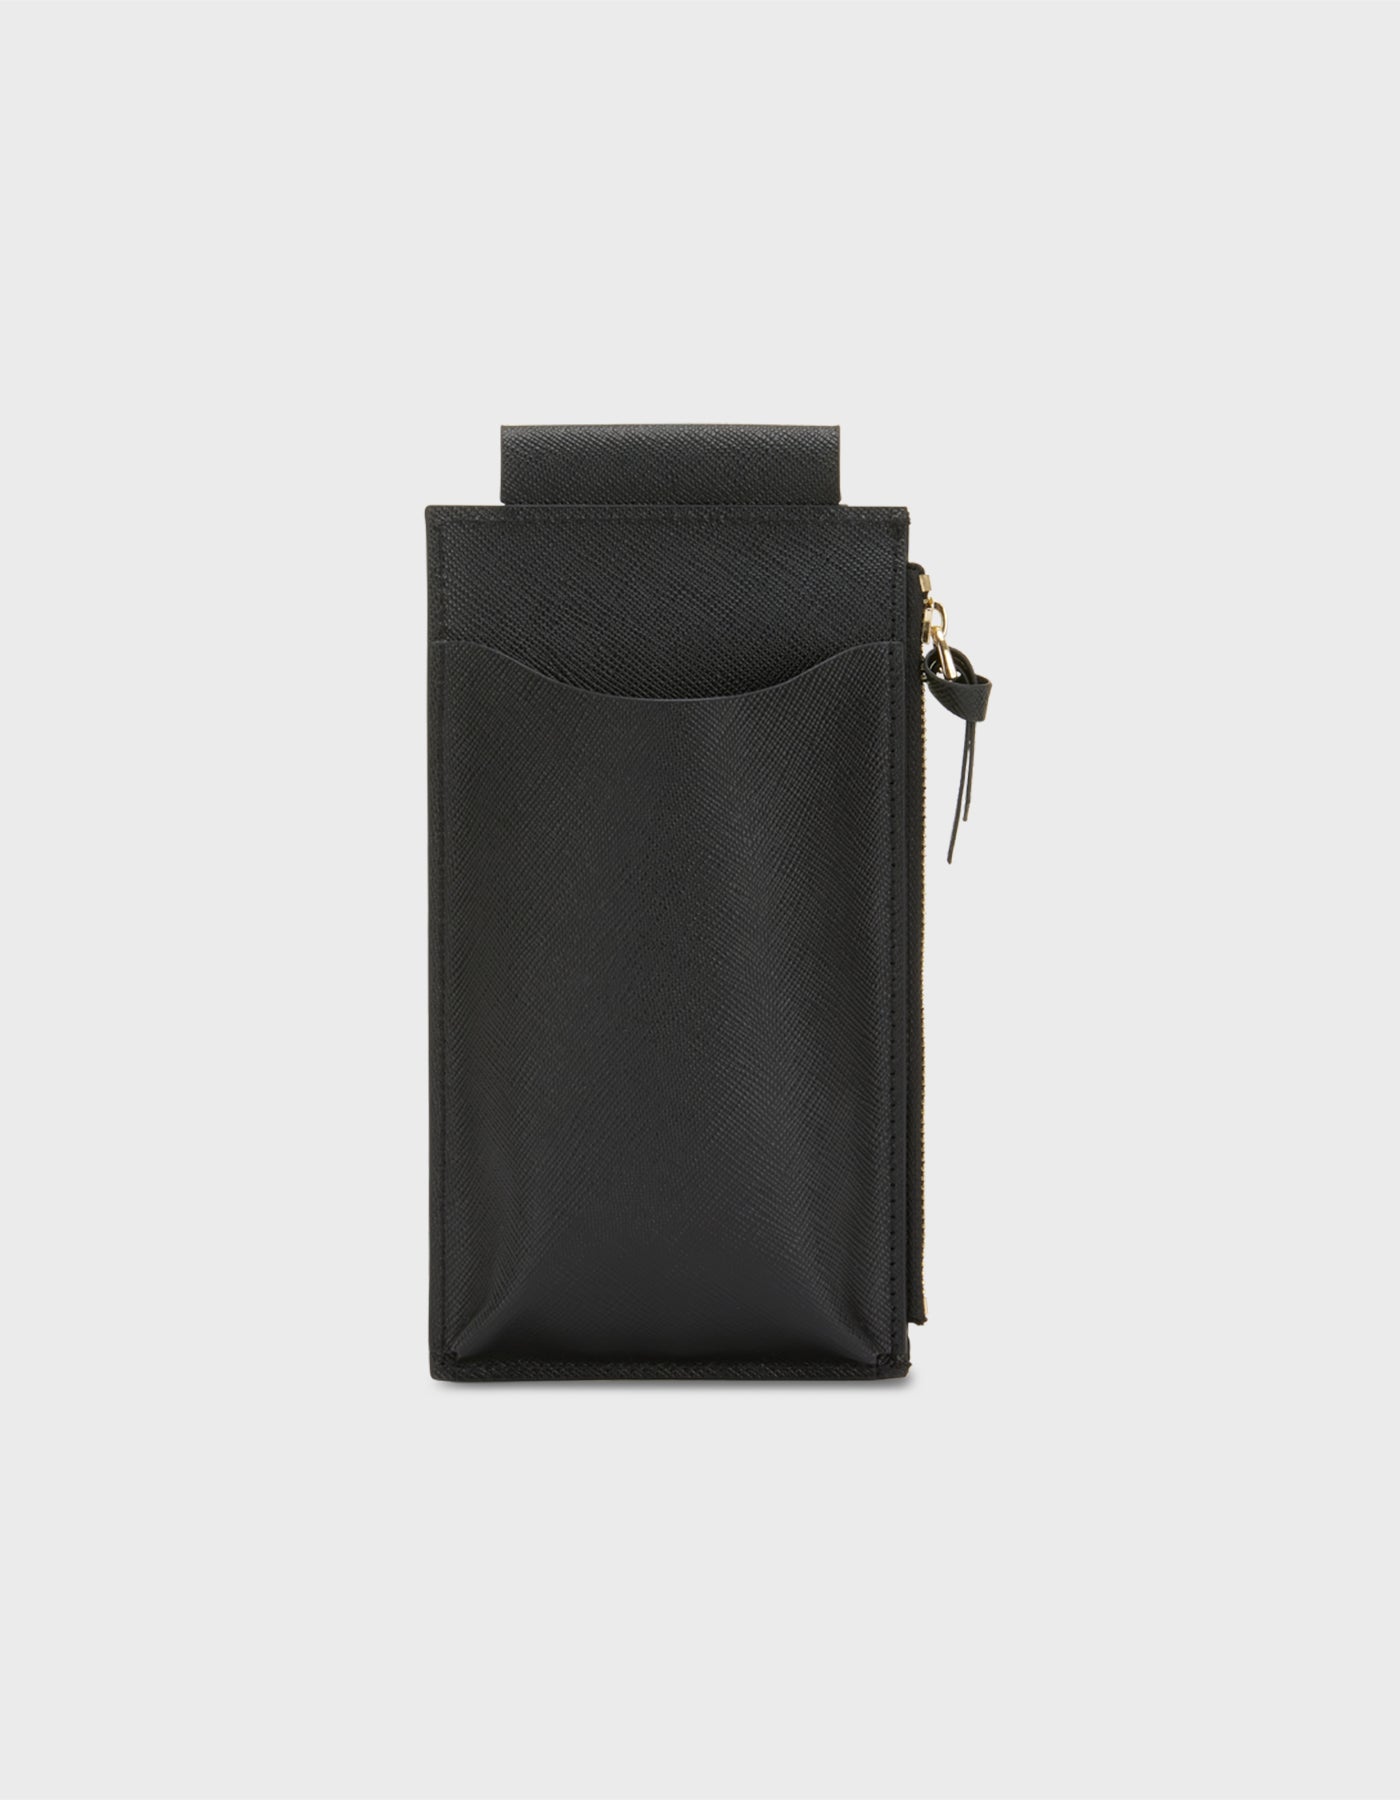 HiVa Atelier - Crossbody Phone Bag Black